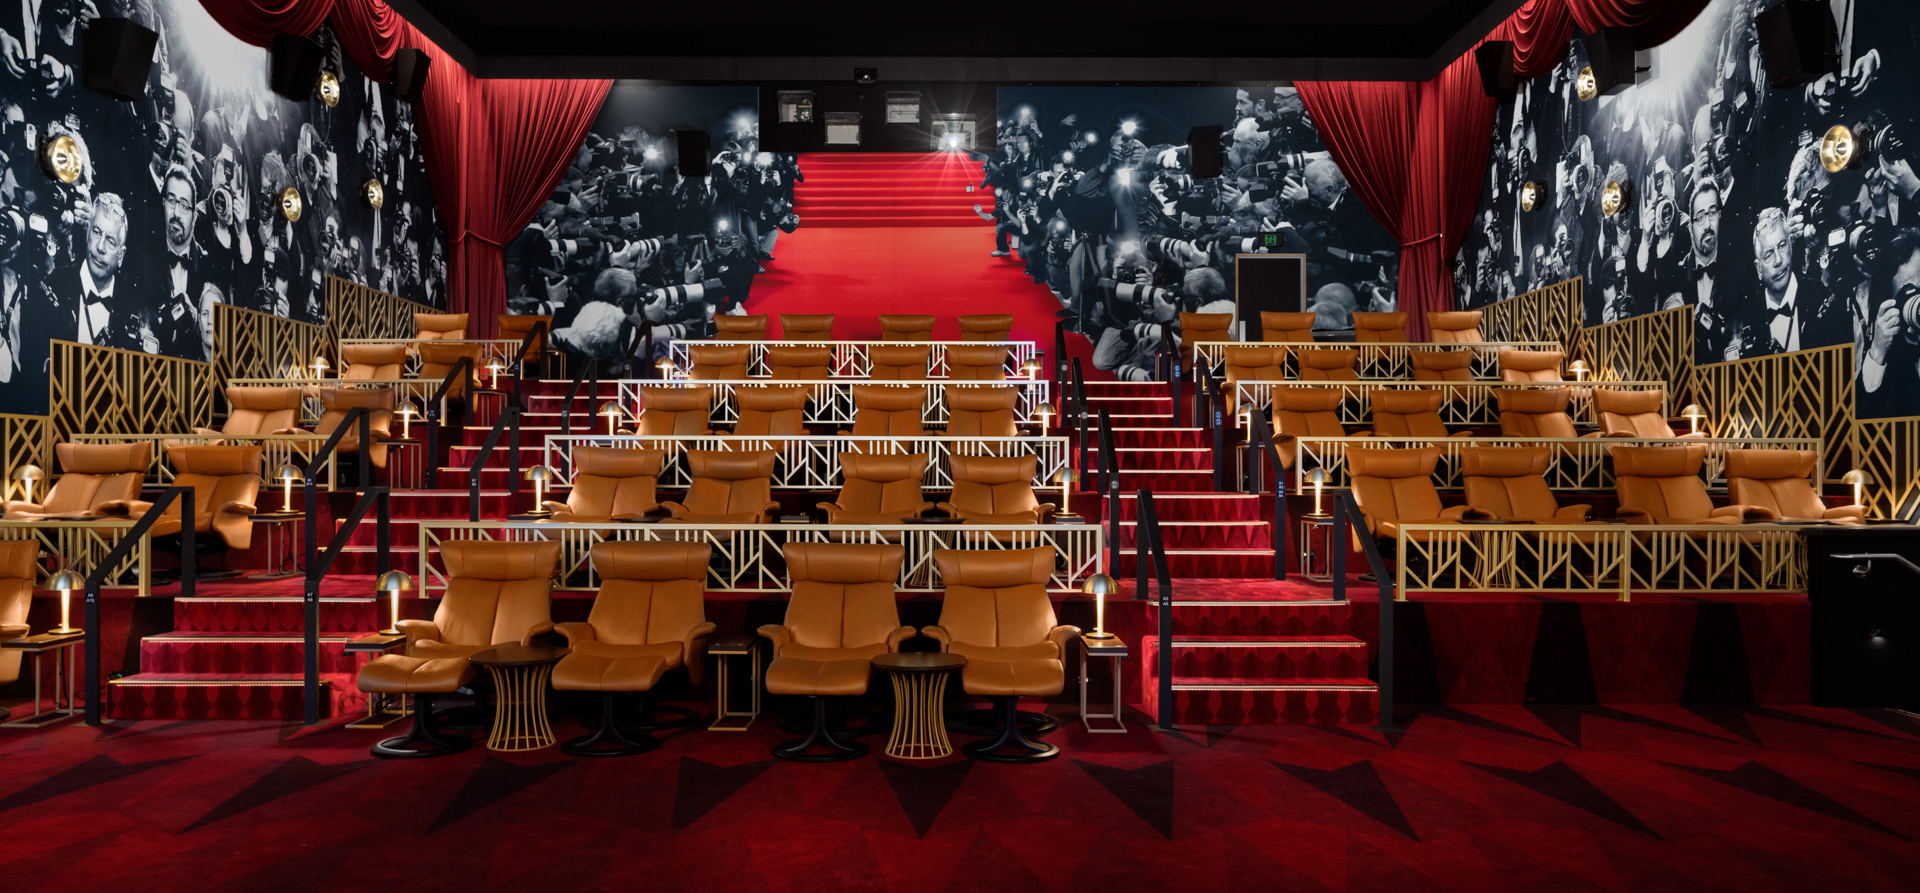 Event Cinemas Launches New Designer Cinemas - Boxoffice